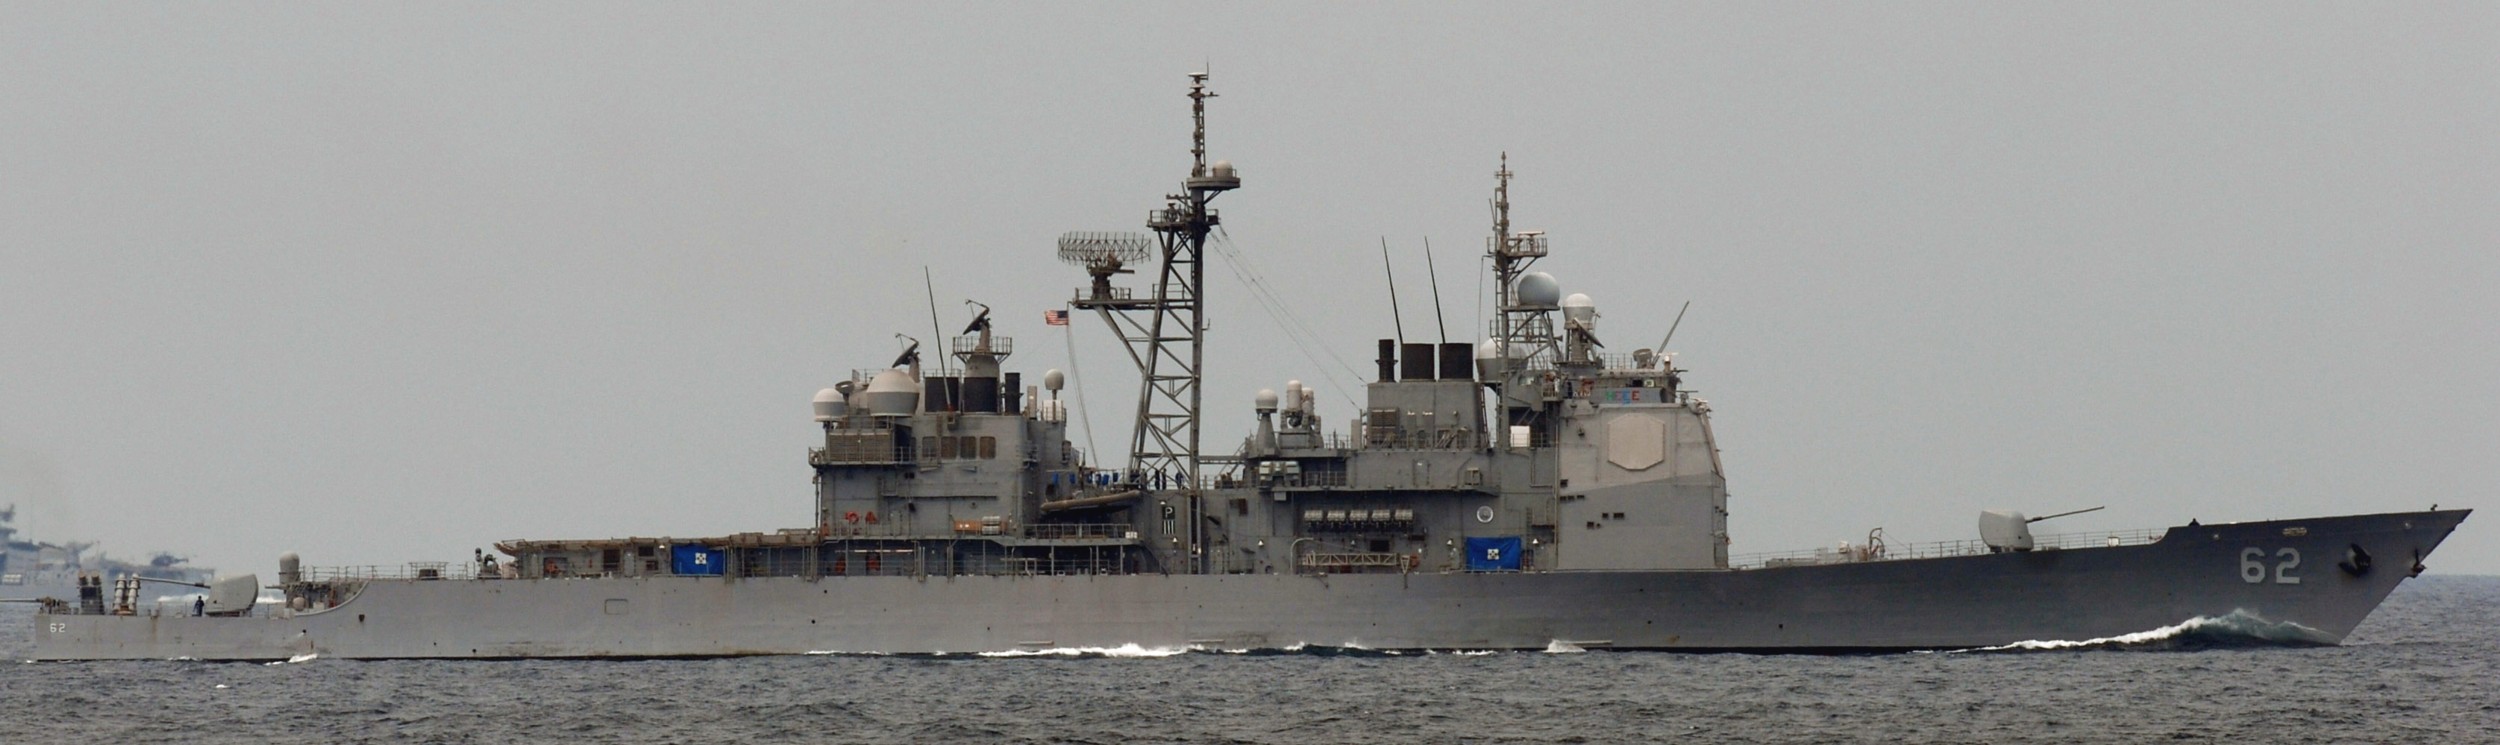 cg-62 uss chancellorsville ticonderoga class guided missile cruiser aegis us navy indian ocean 17